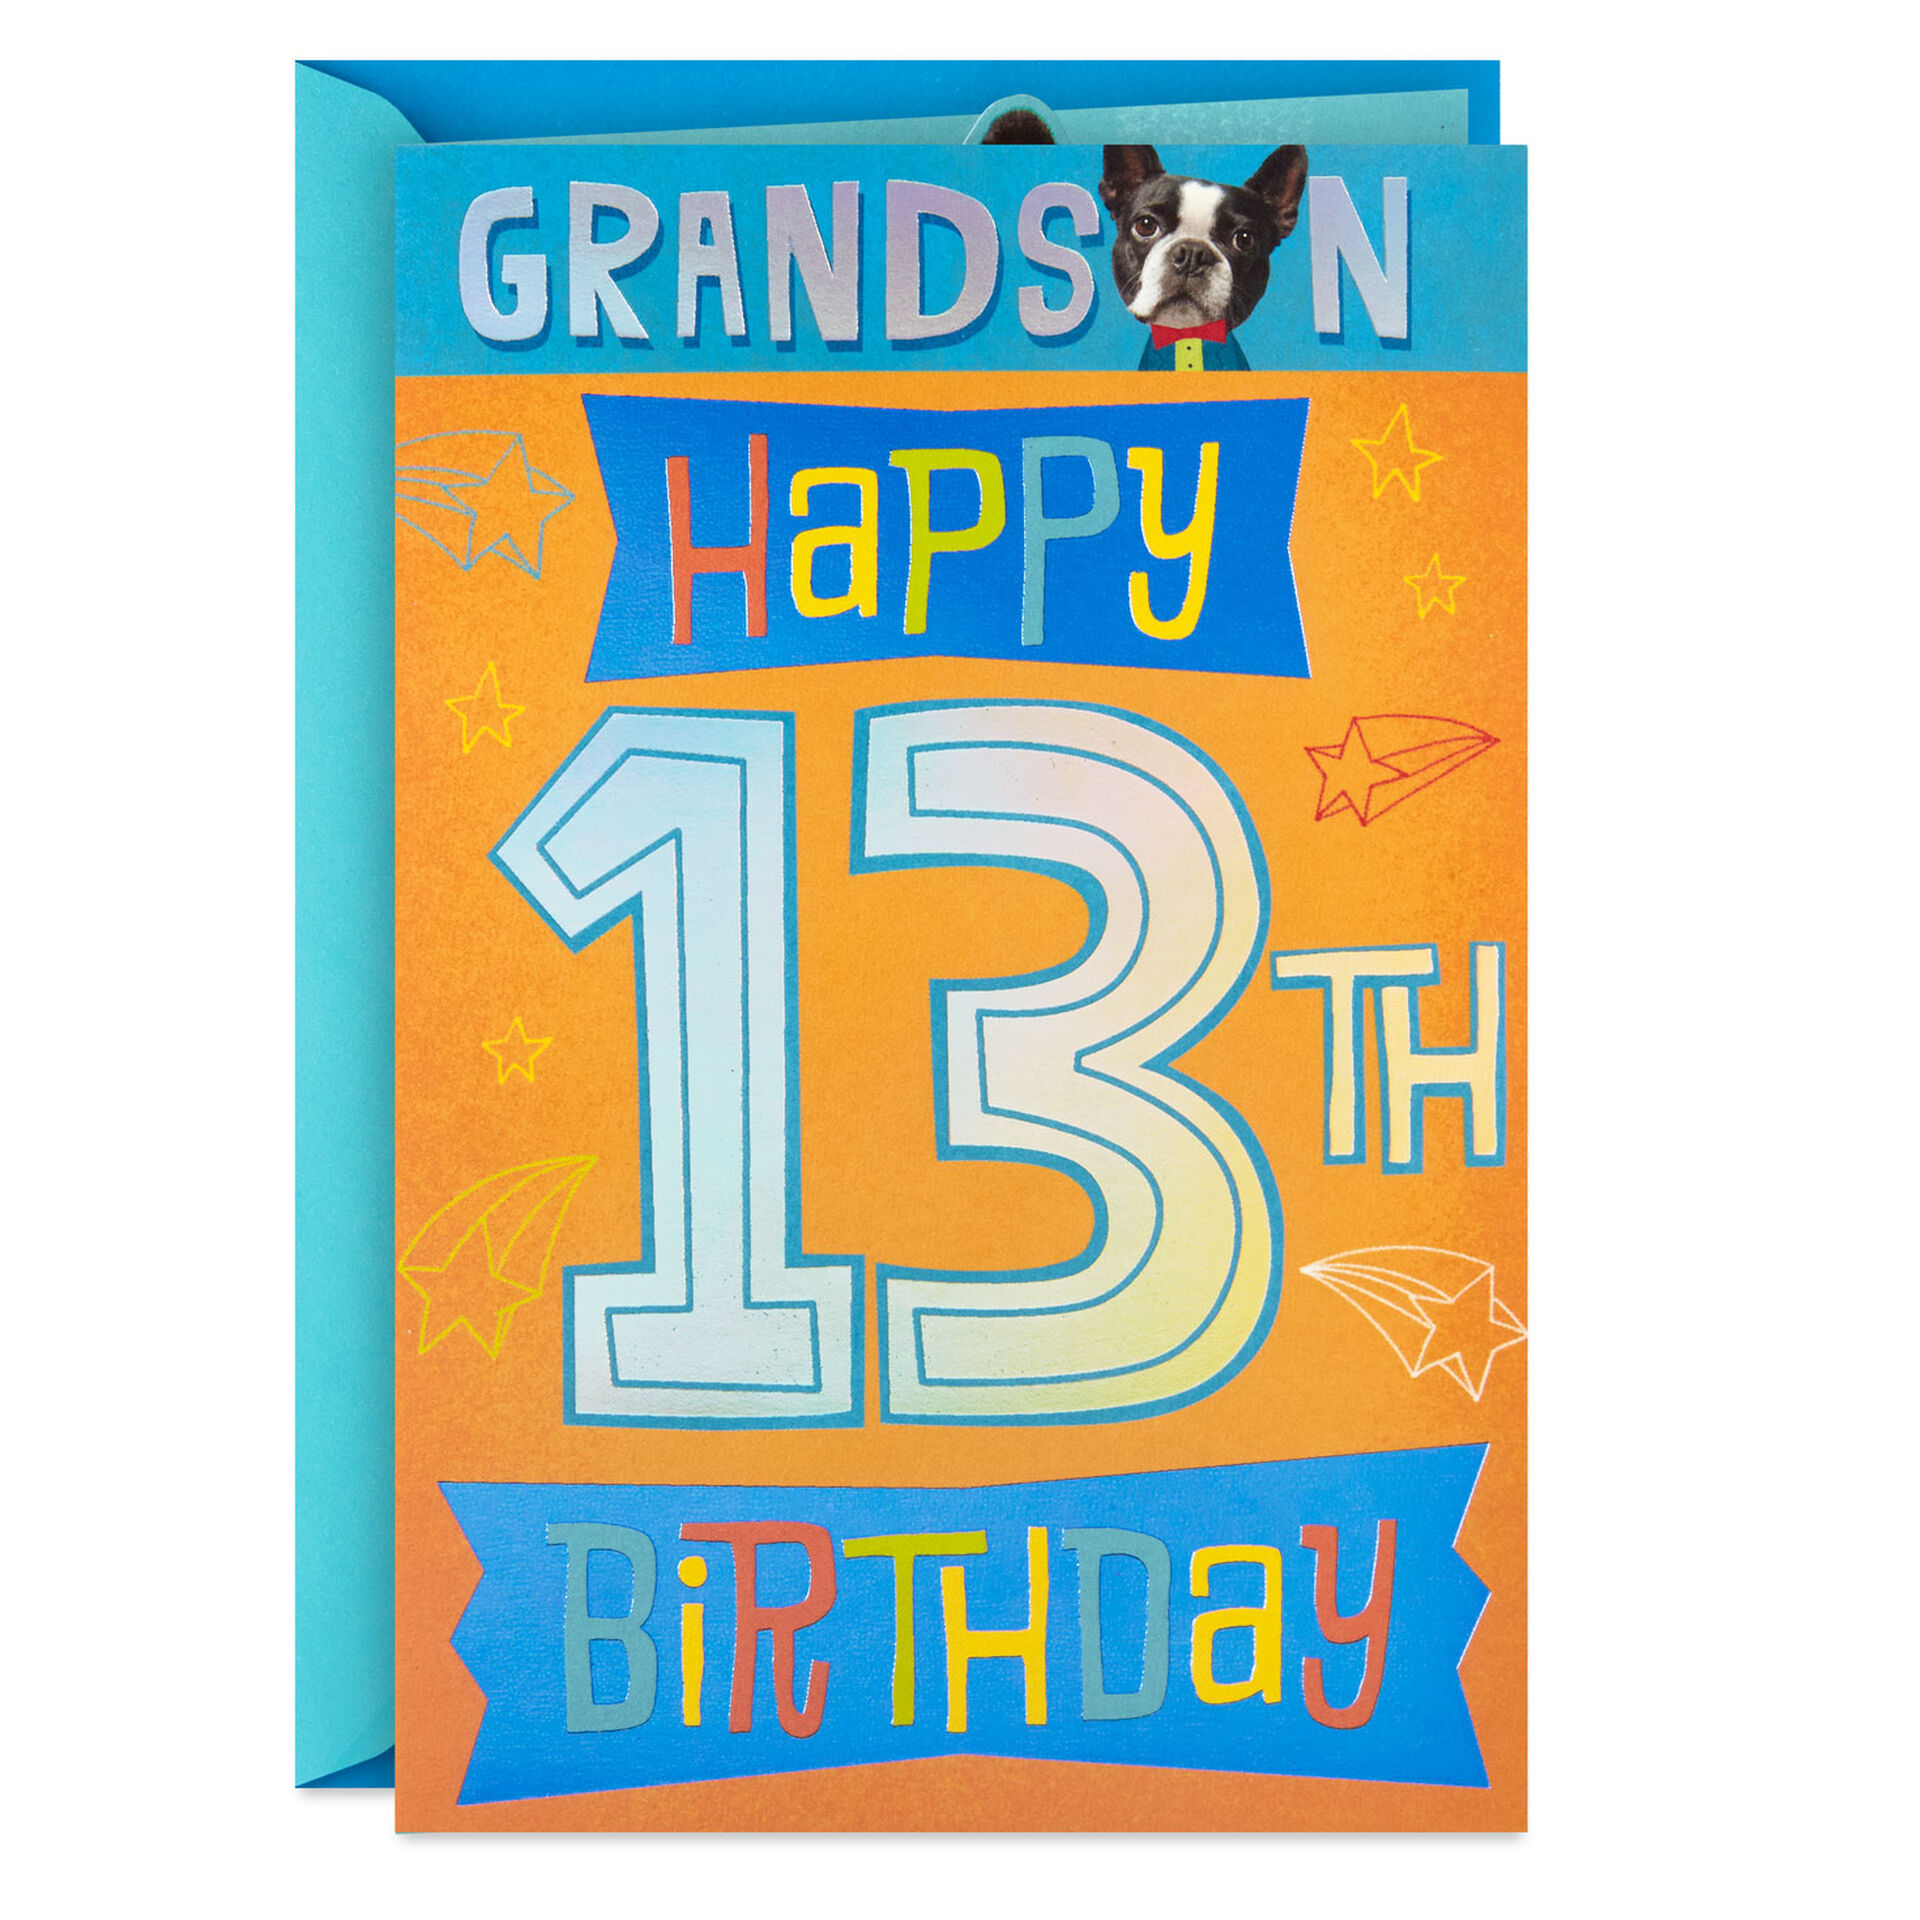 Dog-PopUp-13th-Birthday-Card-for-Grandson_399HKB5854_01